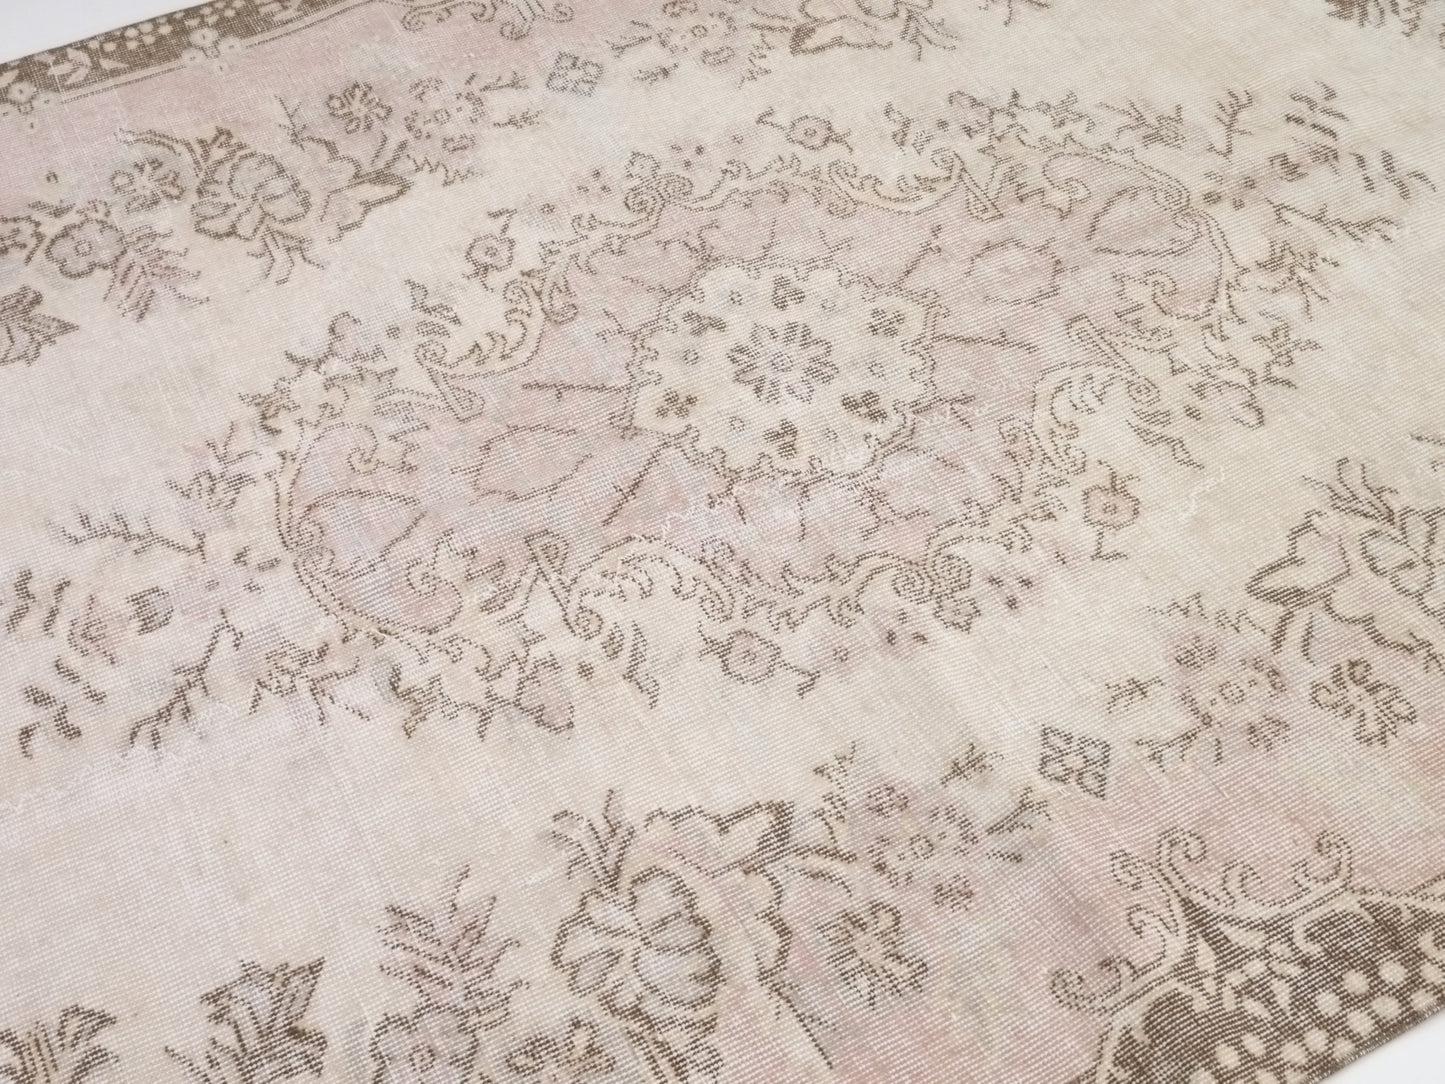 Turkish rug, Oushak rug, Unique Rug, Vintage Rug, 6x9 Rug, Floral rug, Handmade rug, Farmhouse decor, Living room rug, Area rug, 10243